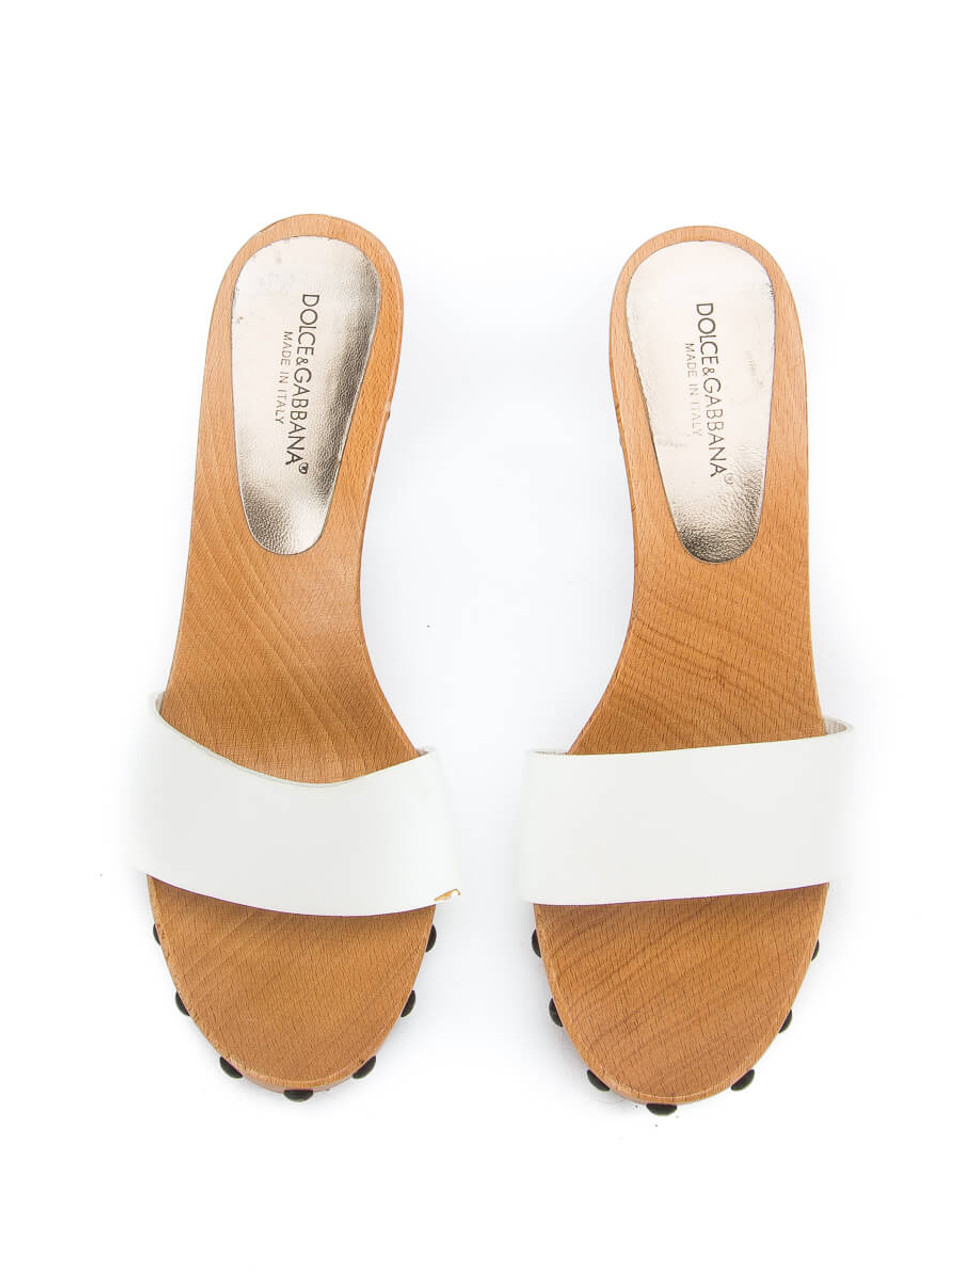 Dolce Gabbana Women's Wooden Platform Slides, Size 5.5 UK, White Leather